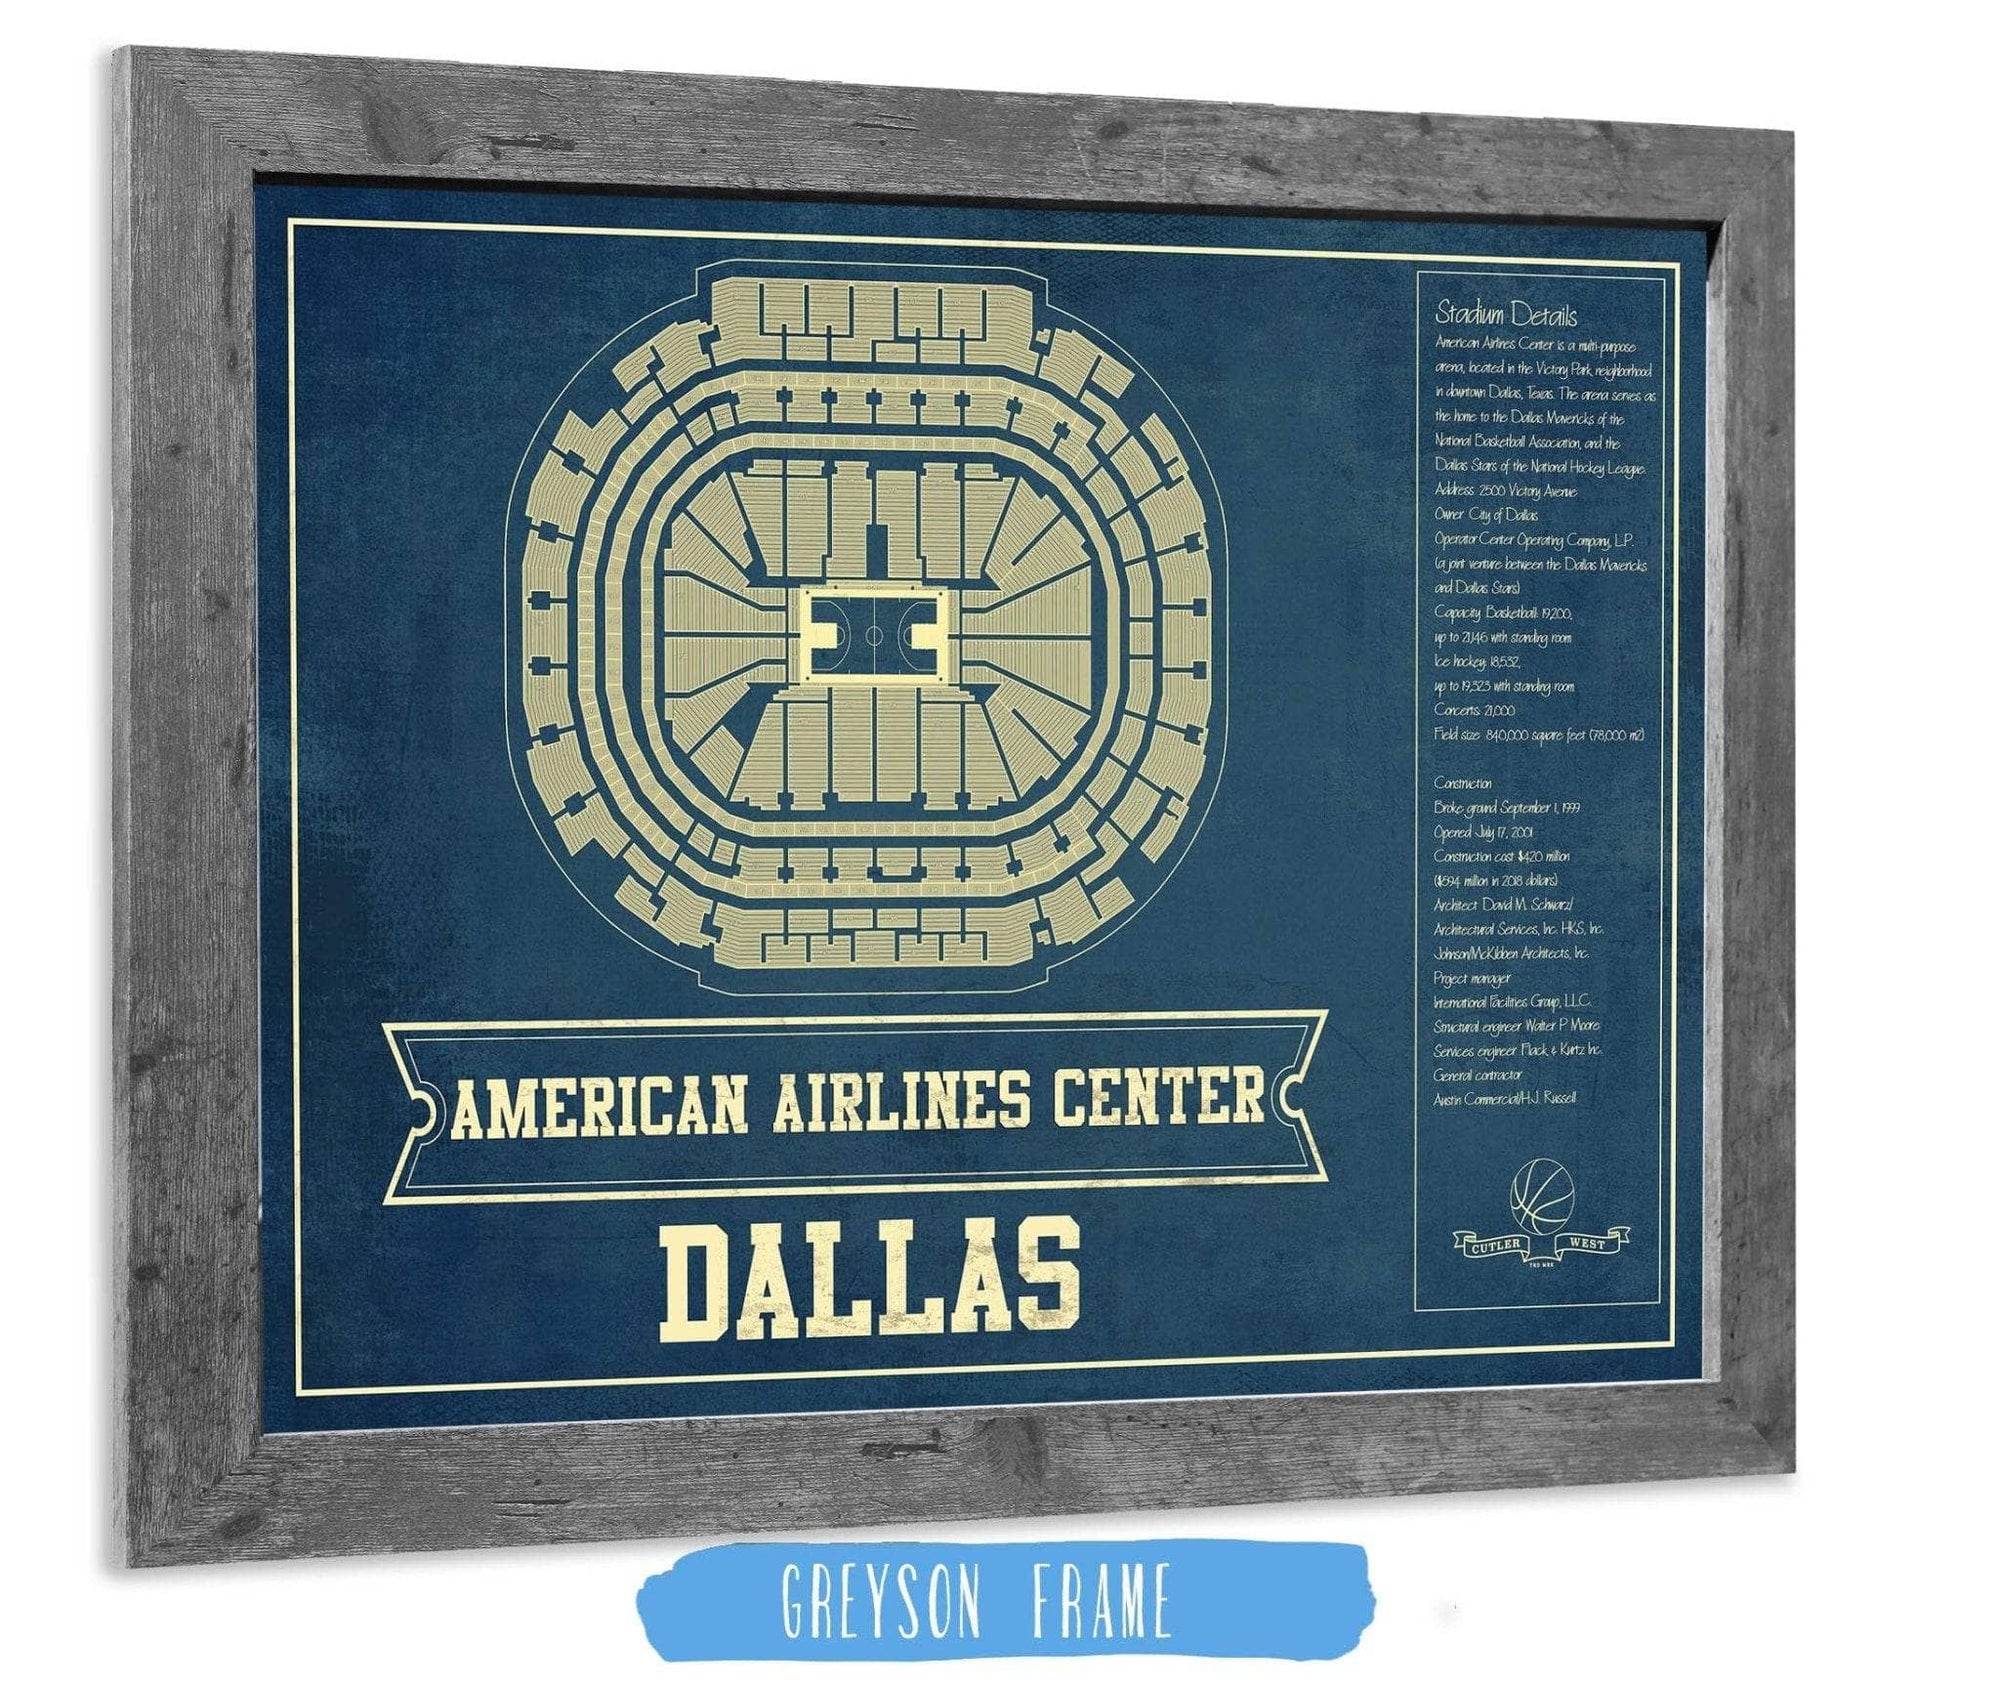 Cutler West Basketball Collection 14" x 11" / Greyson Frame Dallas Mavericks Vintage American Airlines Center NBA Print 933350162_76174